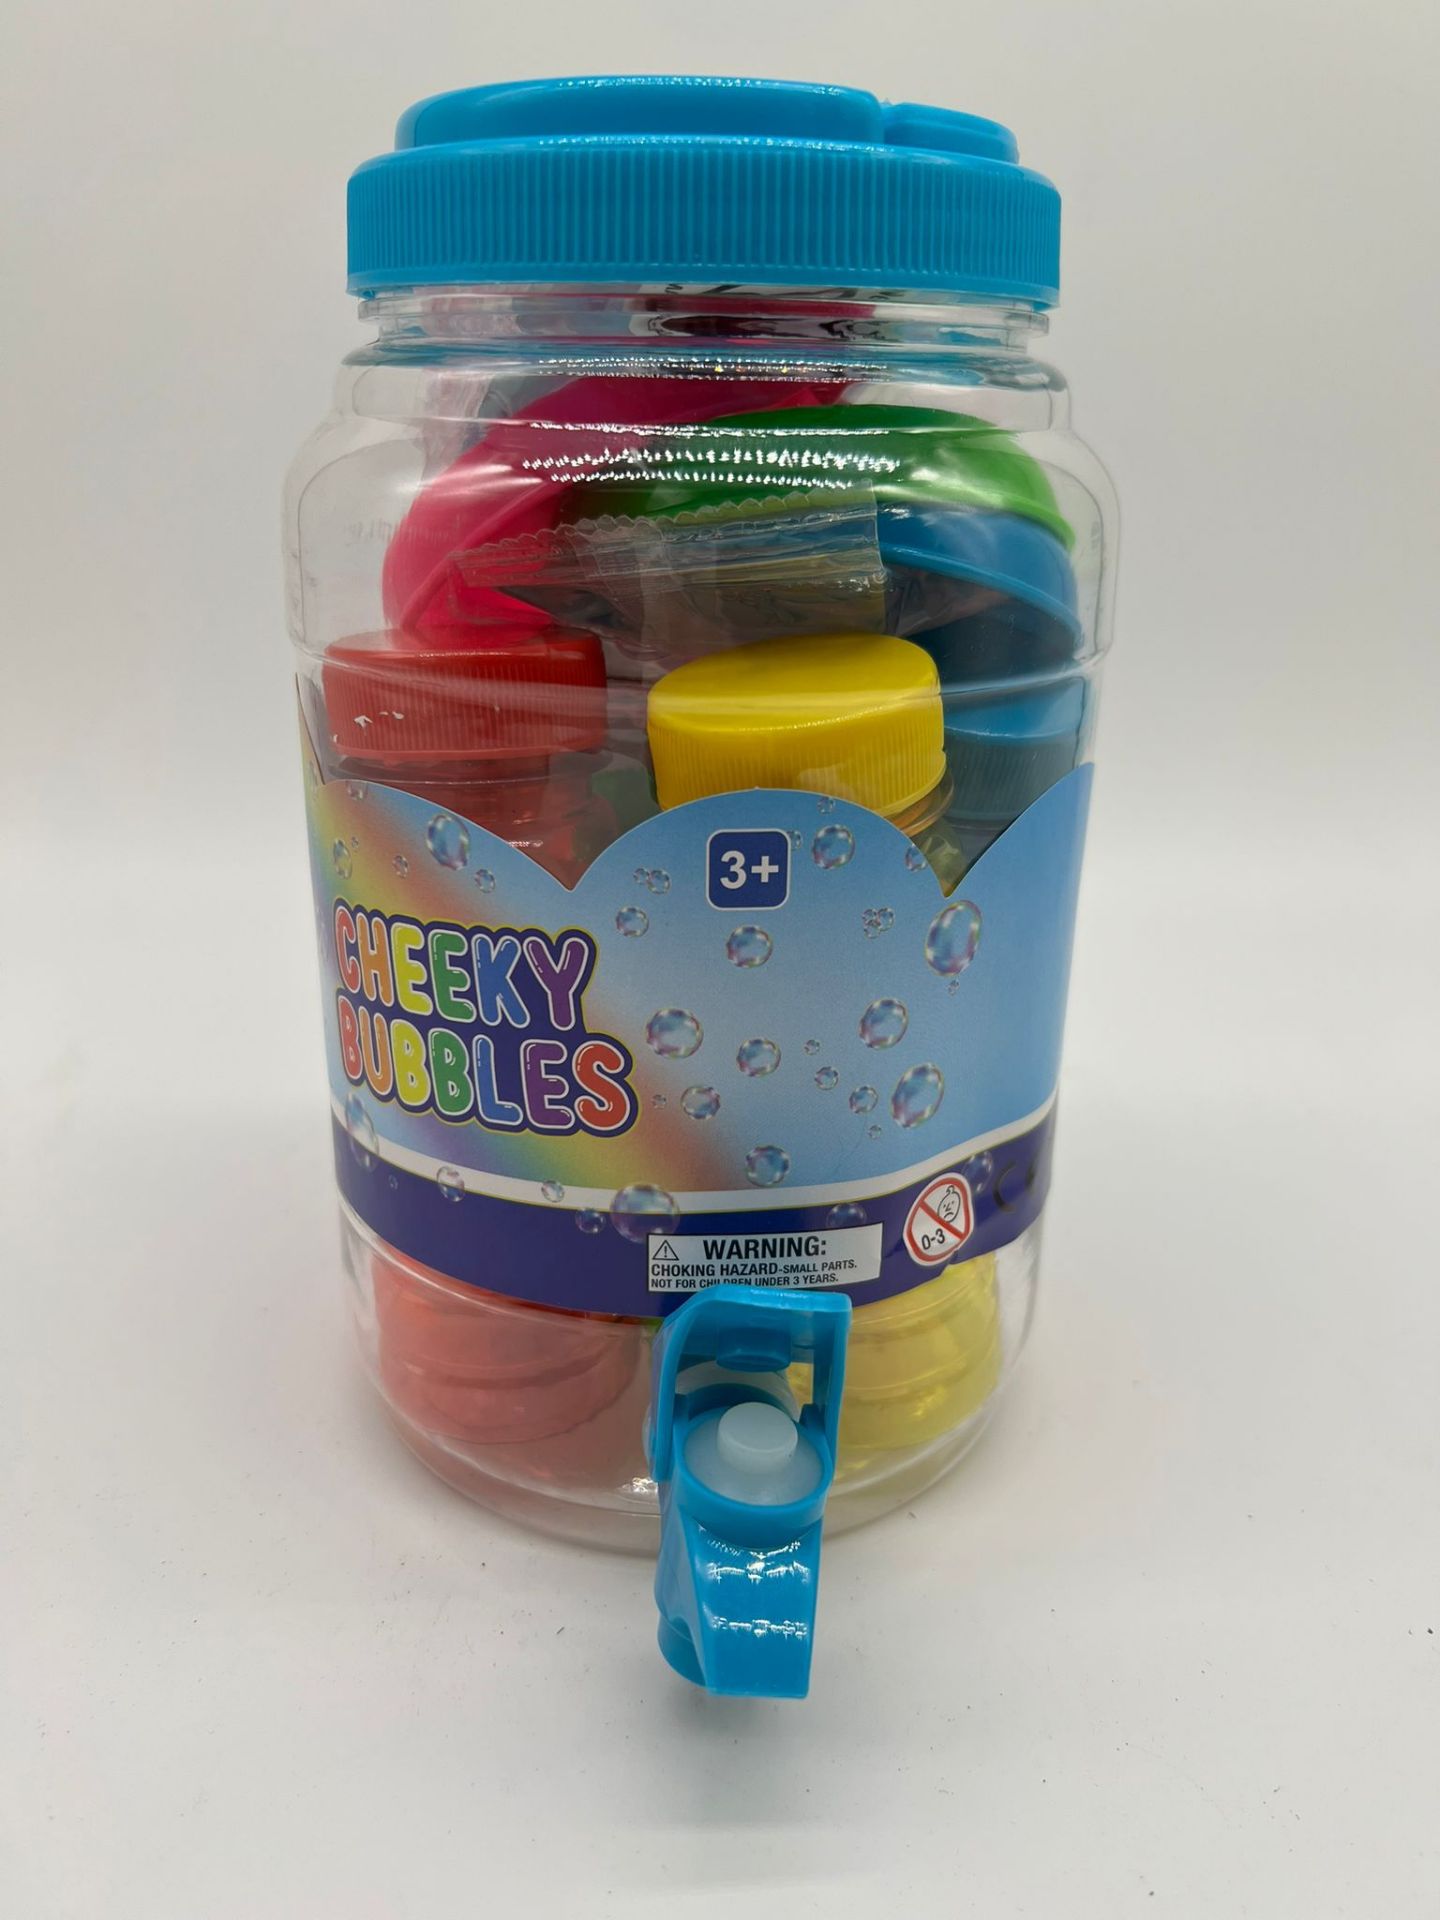 New Cheeky Bubble Toy - Includes x1 Bubble Refill, x3 Bubble Bottles, x4 Bubble Brush Wands, x3